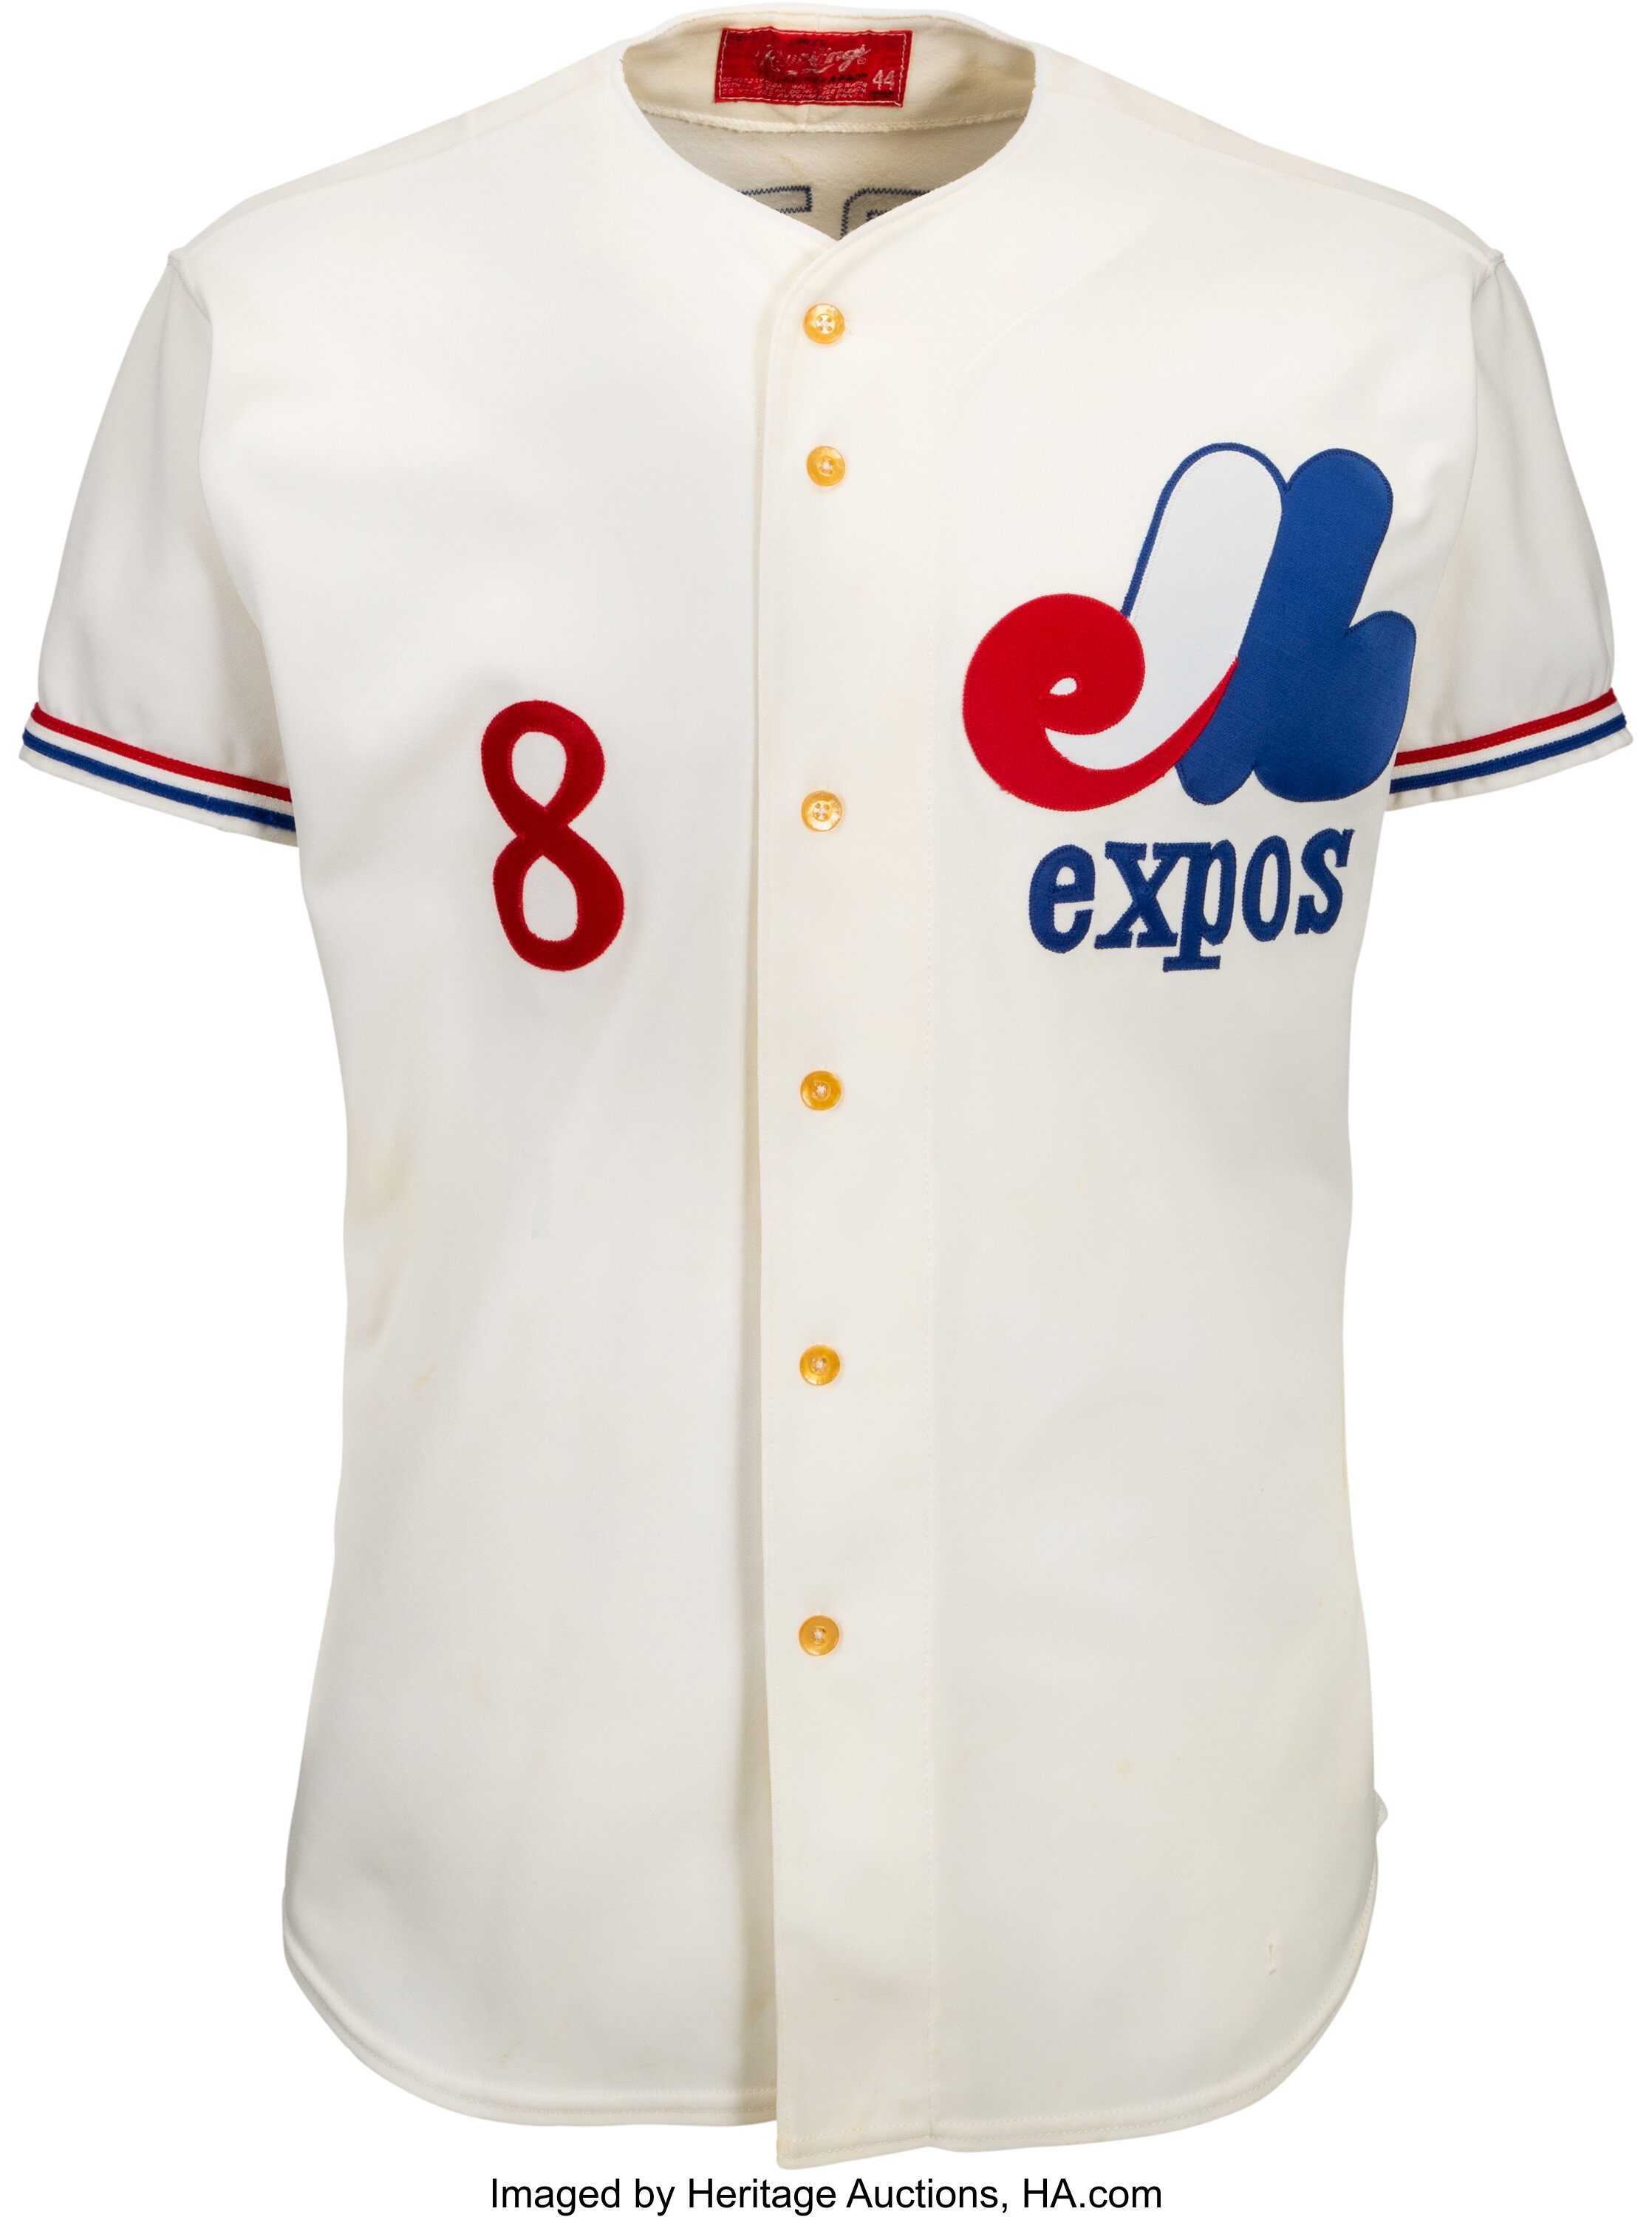 1980-88 Game Worn Montreal Expos Jerseys Lot of 2.  Baseball